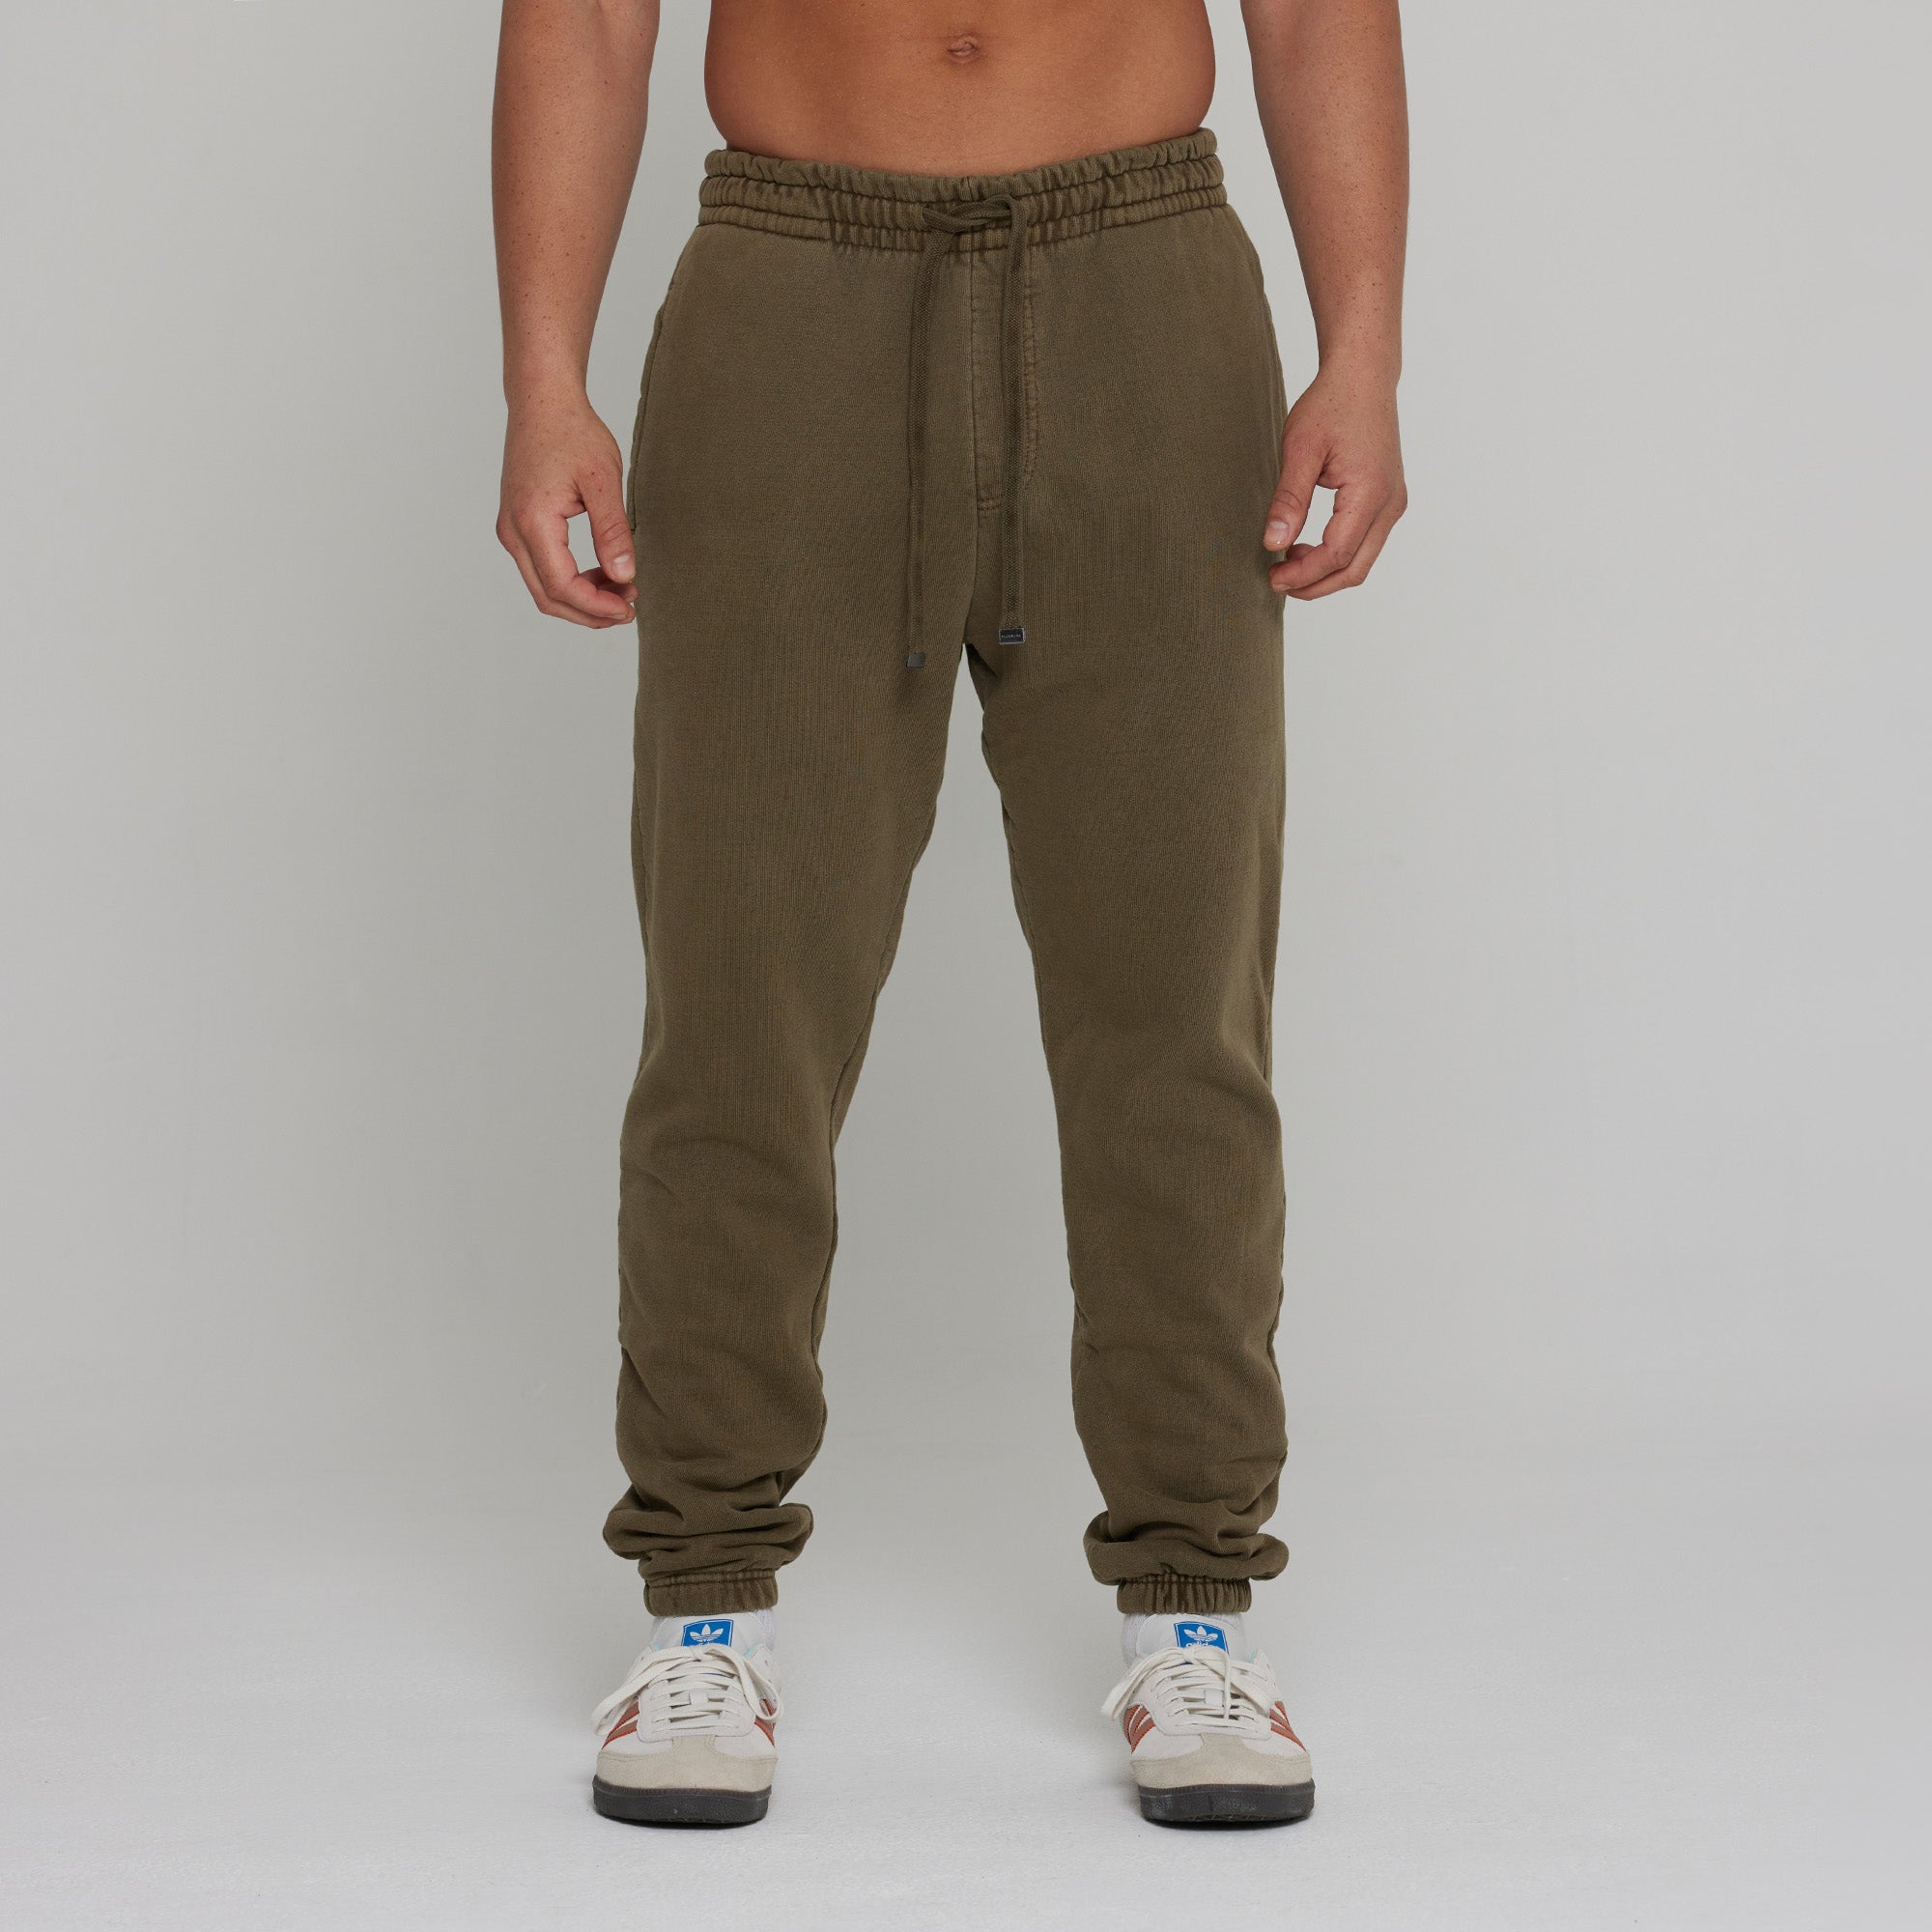 Men's Heavyweight Sweatpants - Premium Quality